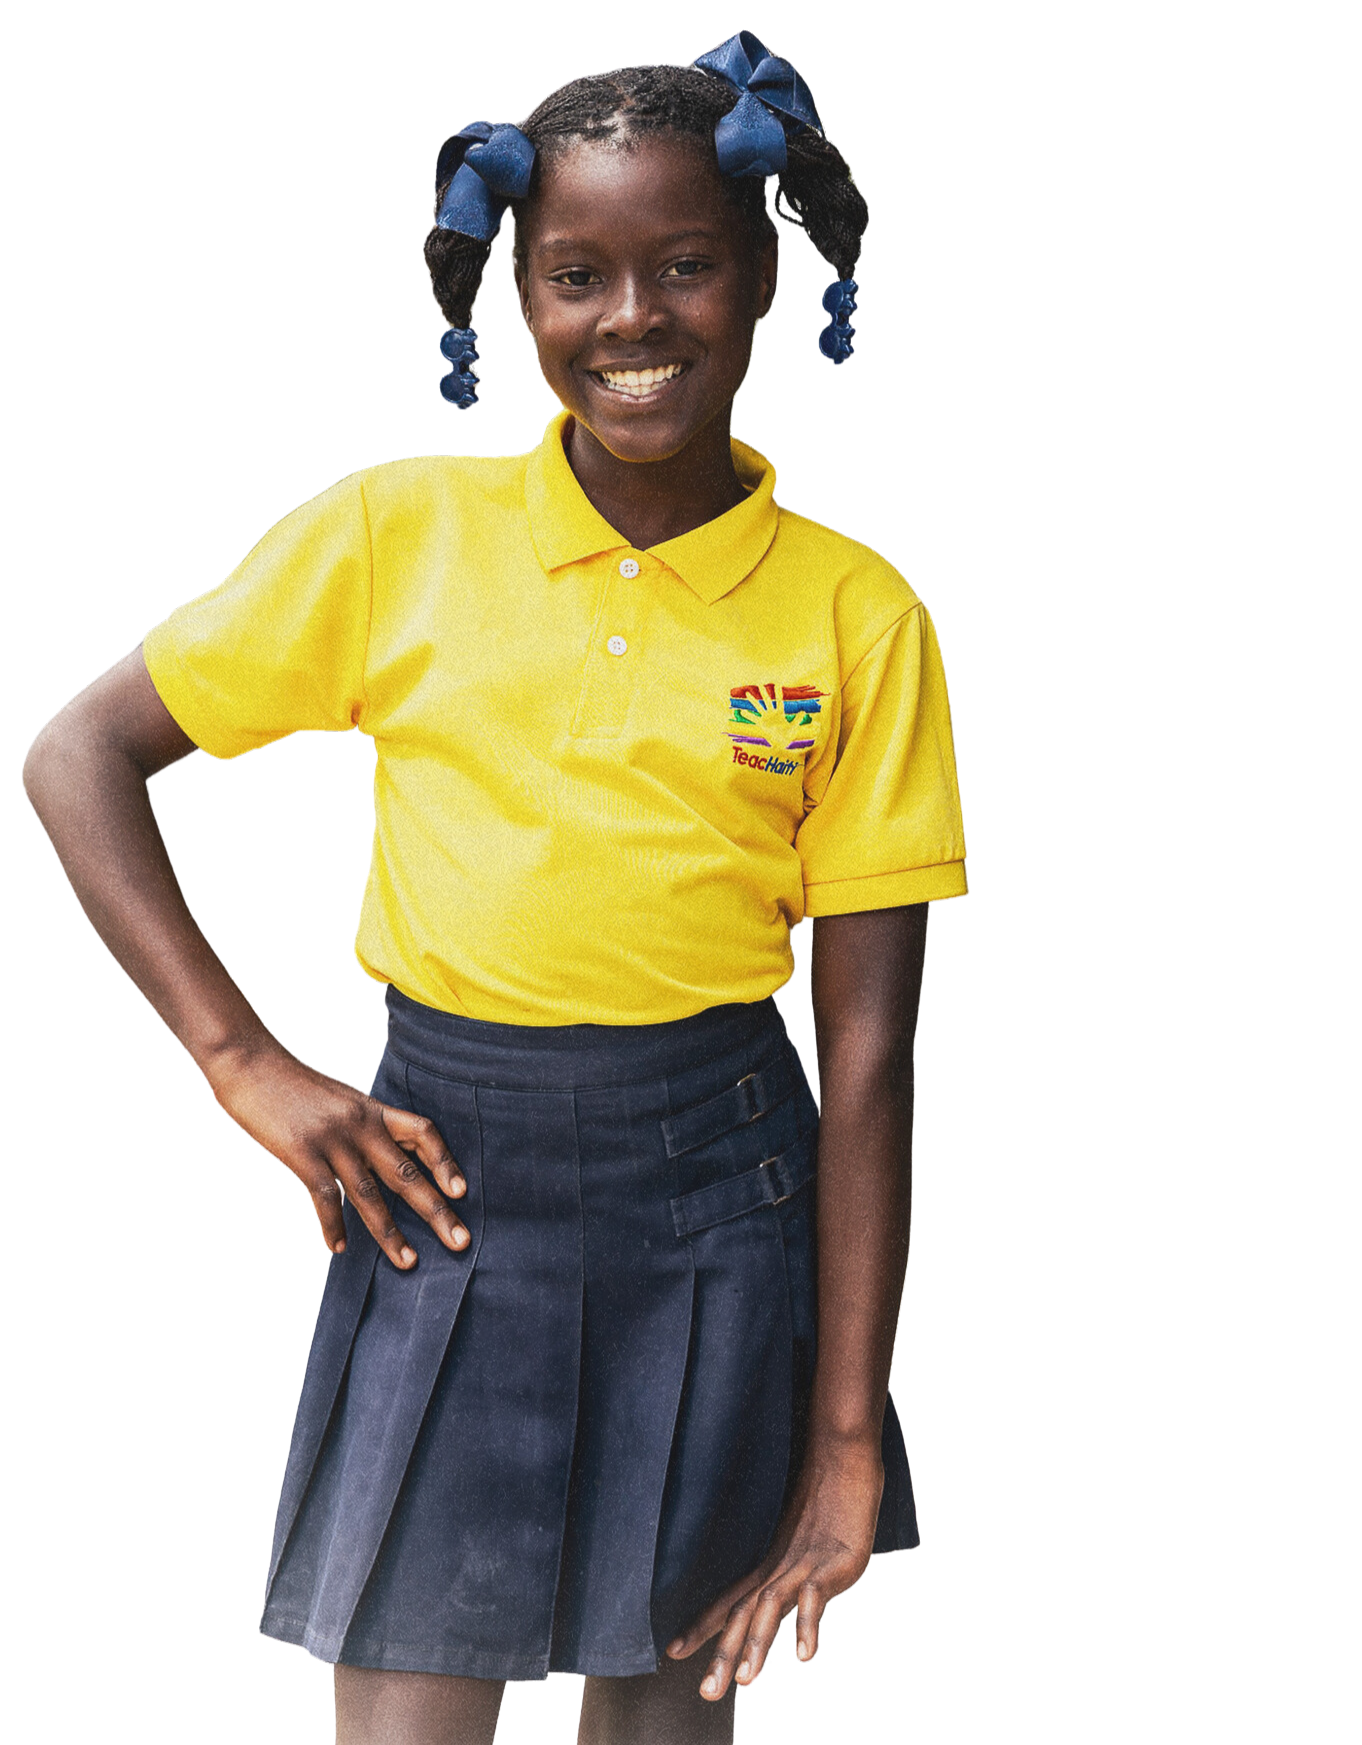 Haitian student wearing yellow Teach Haiti uniform.